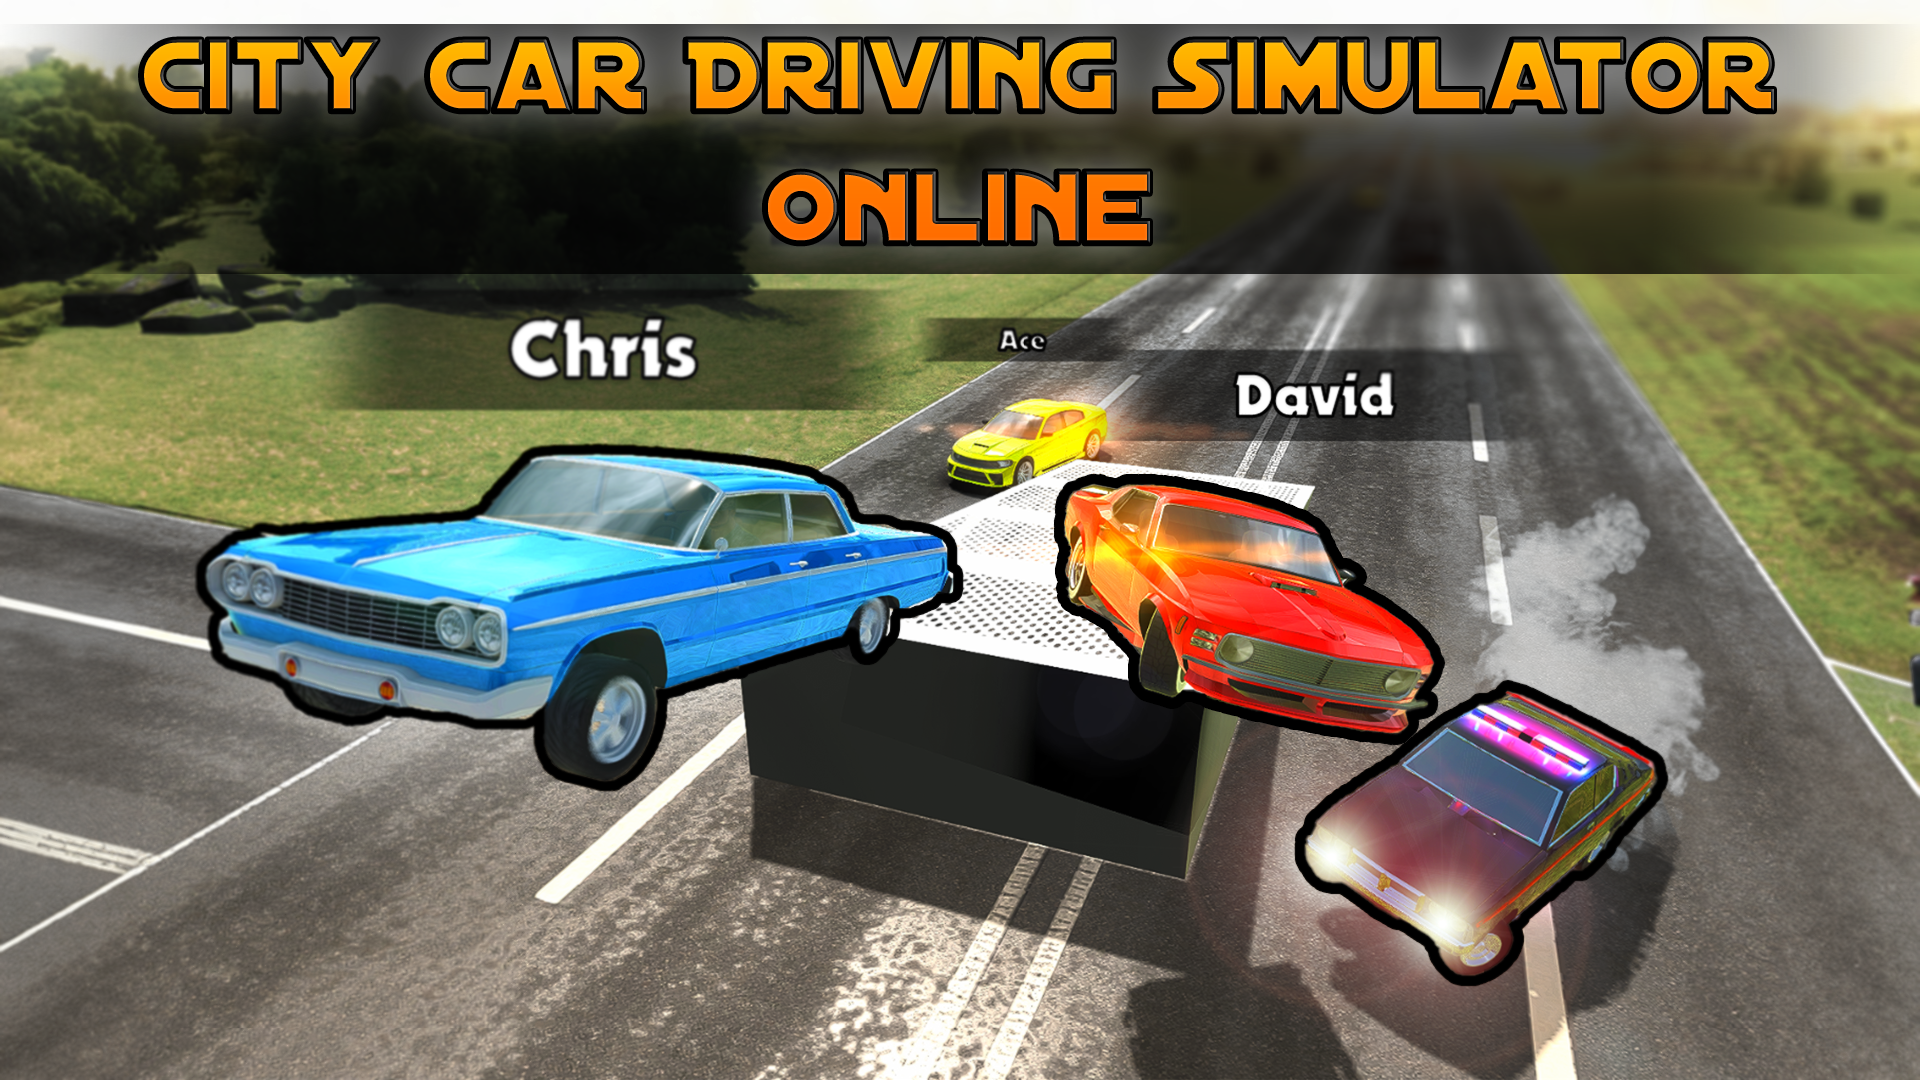 City Car Driving Simulator: Online Game Image